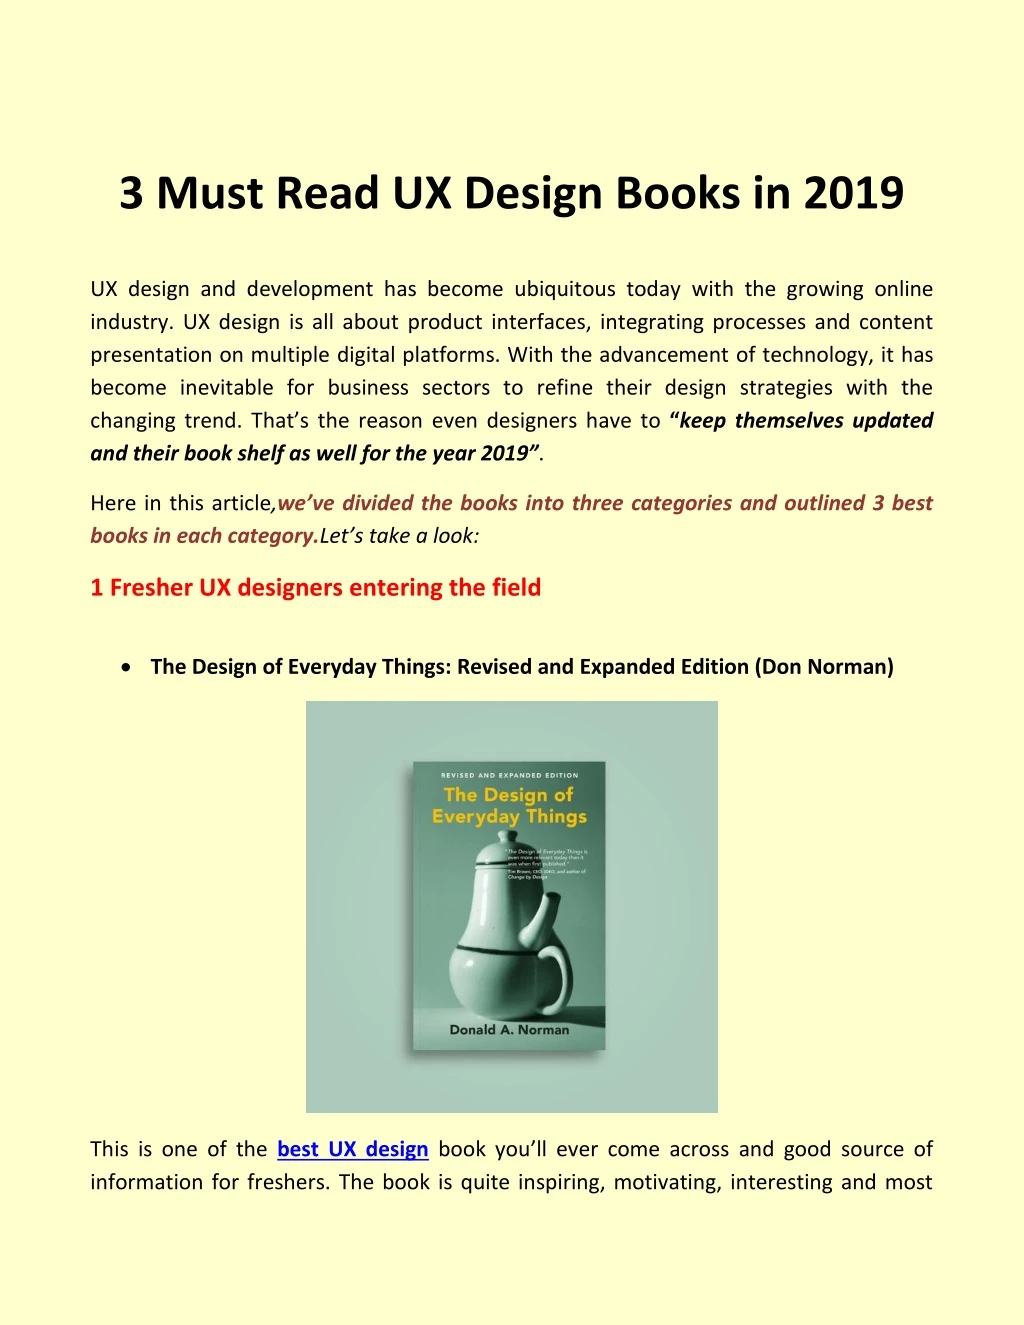 3 must read ux design books in 2019